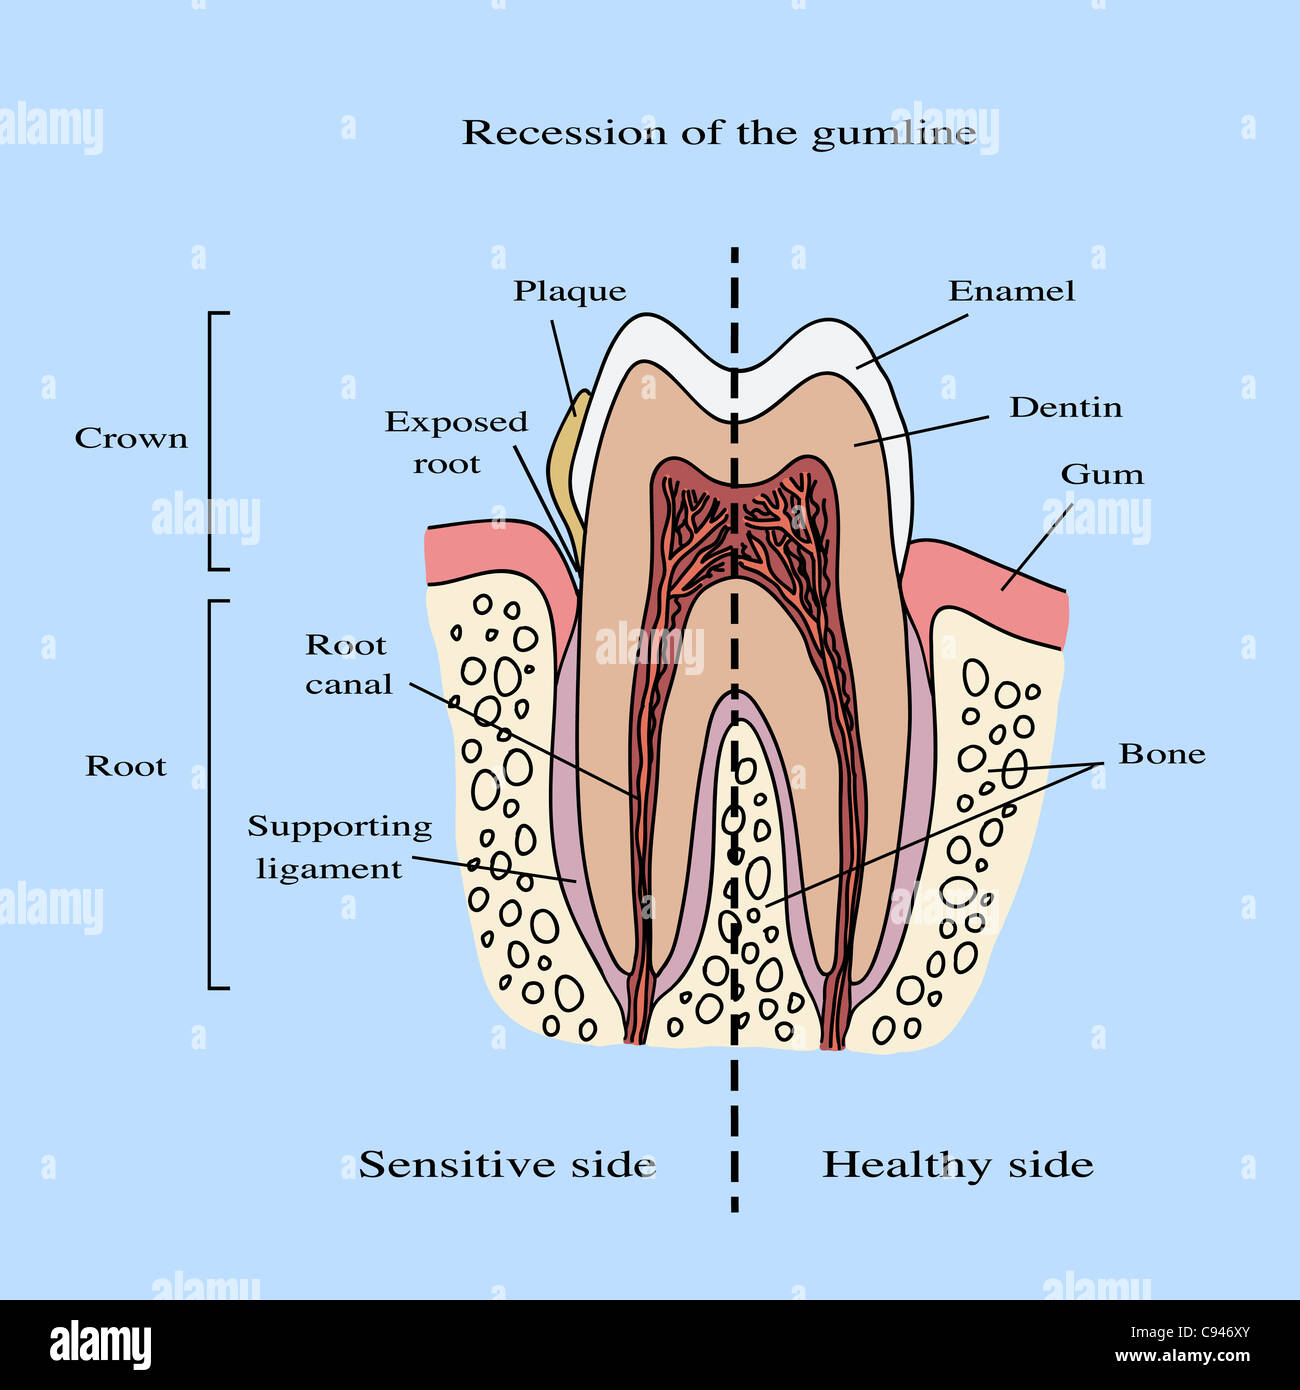 Human tooth anatomy illustration - recession of the gumline Stock Photo